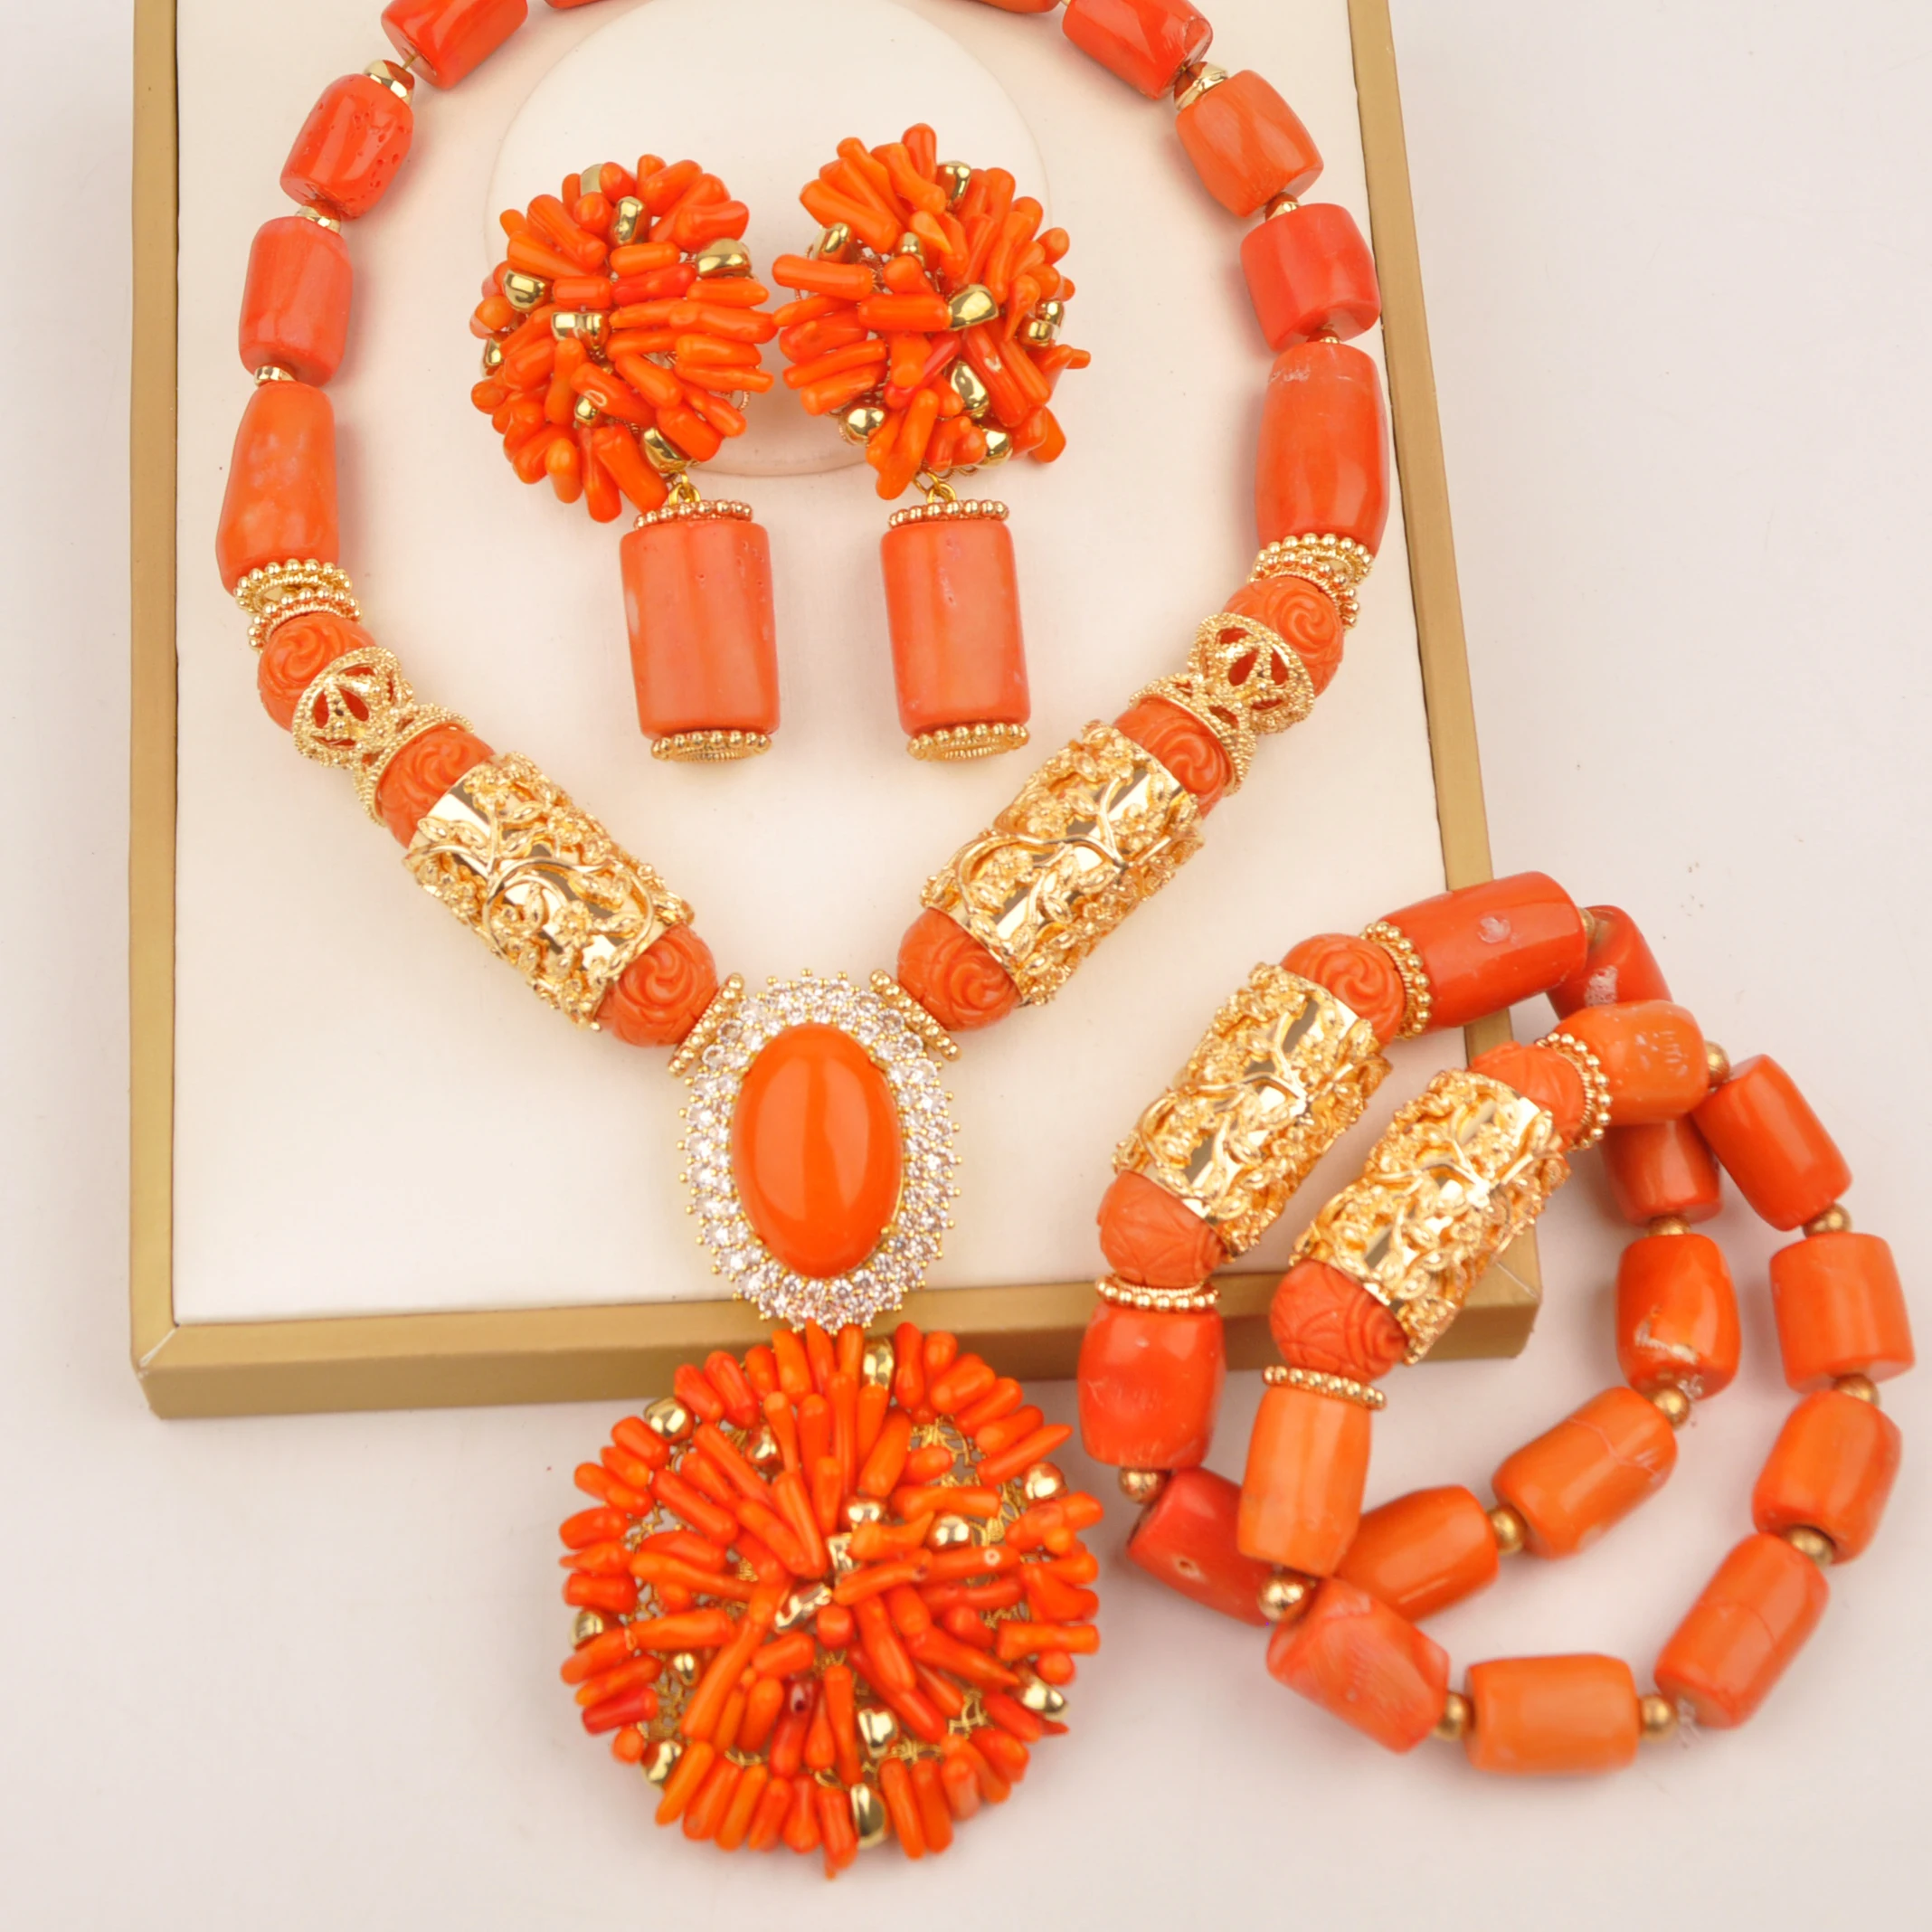 

Nigerian Fashion Natural Coral beads African wedding couple necklace set orange